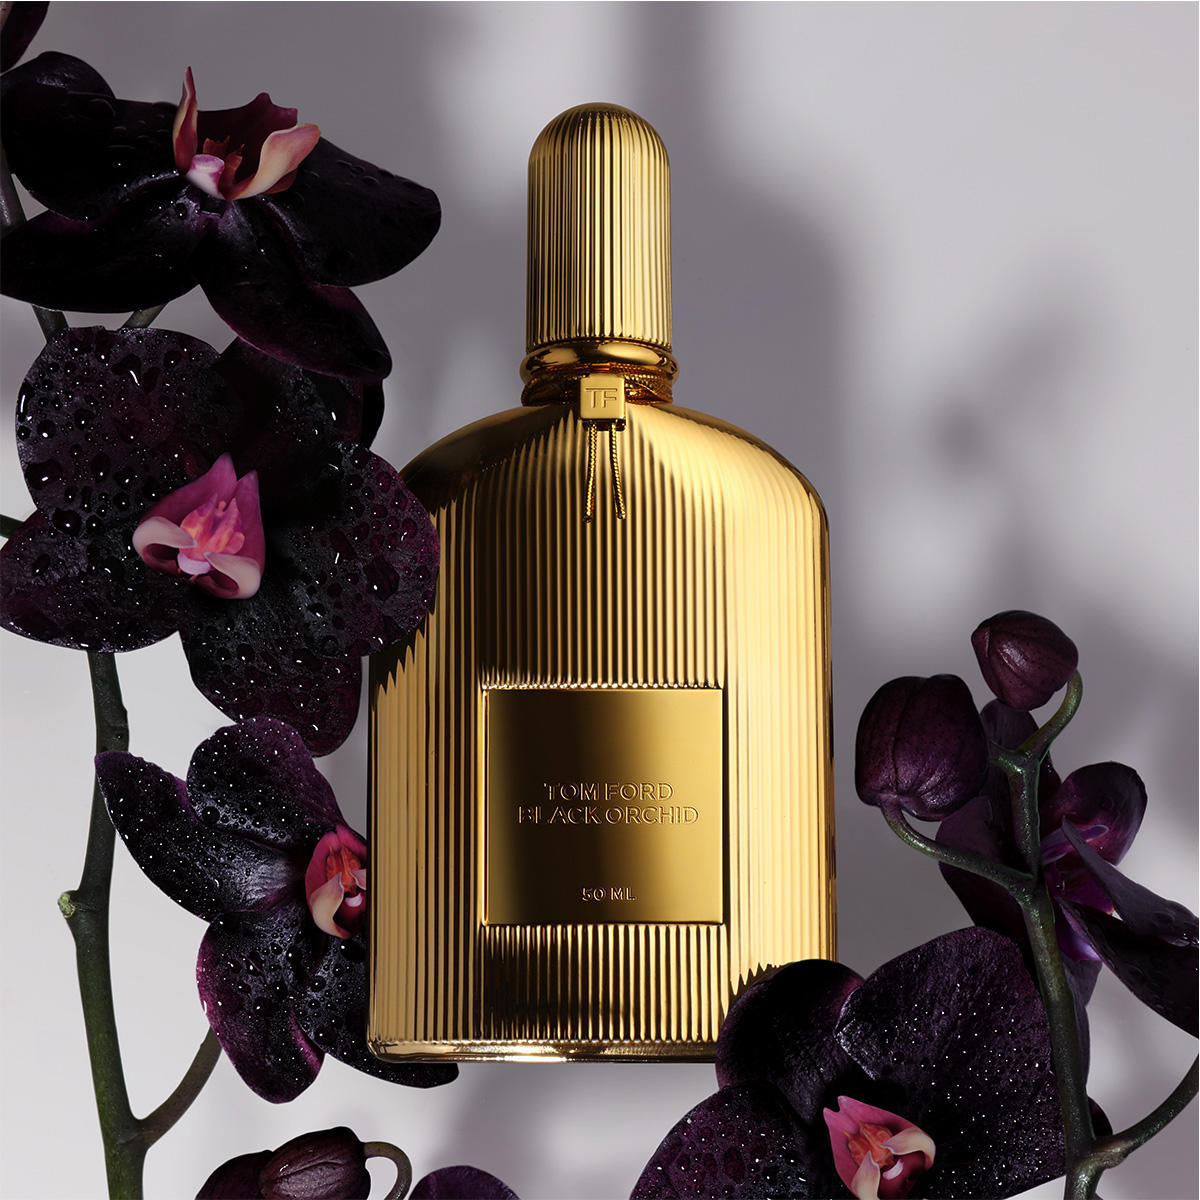 Tom Ford Black Orchid Perfume 50 ml - 3